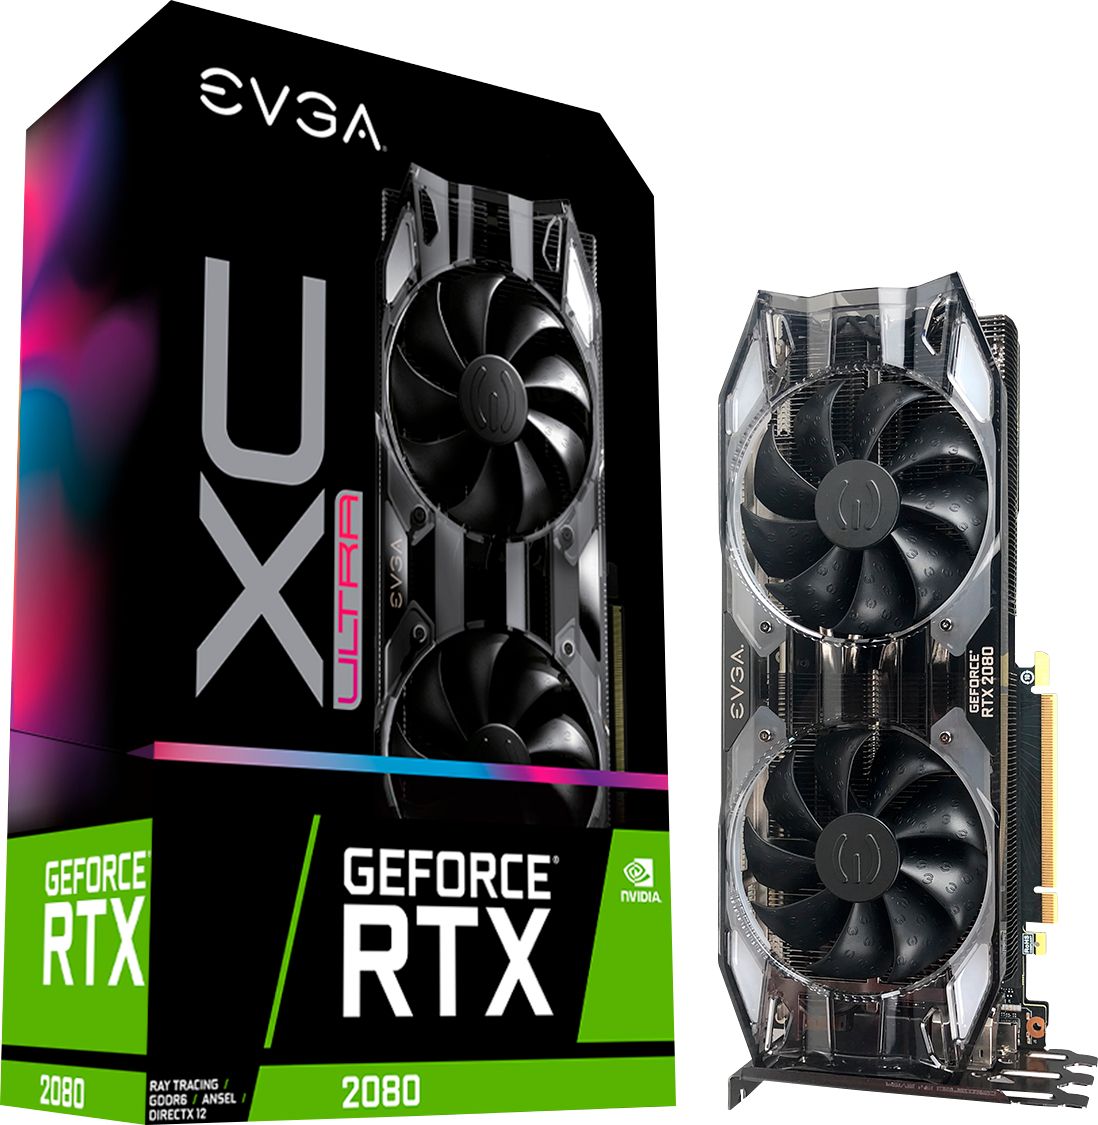 EVGA GeForce RTX 2080 XC Ultra Gaming 8GB GDDR6 PCI Express 3.0 Graphics Card 08G-P4-2183-KB - Best